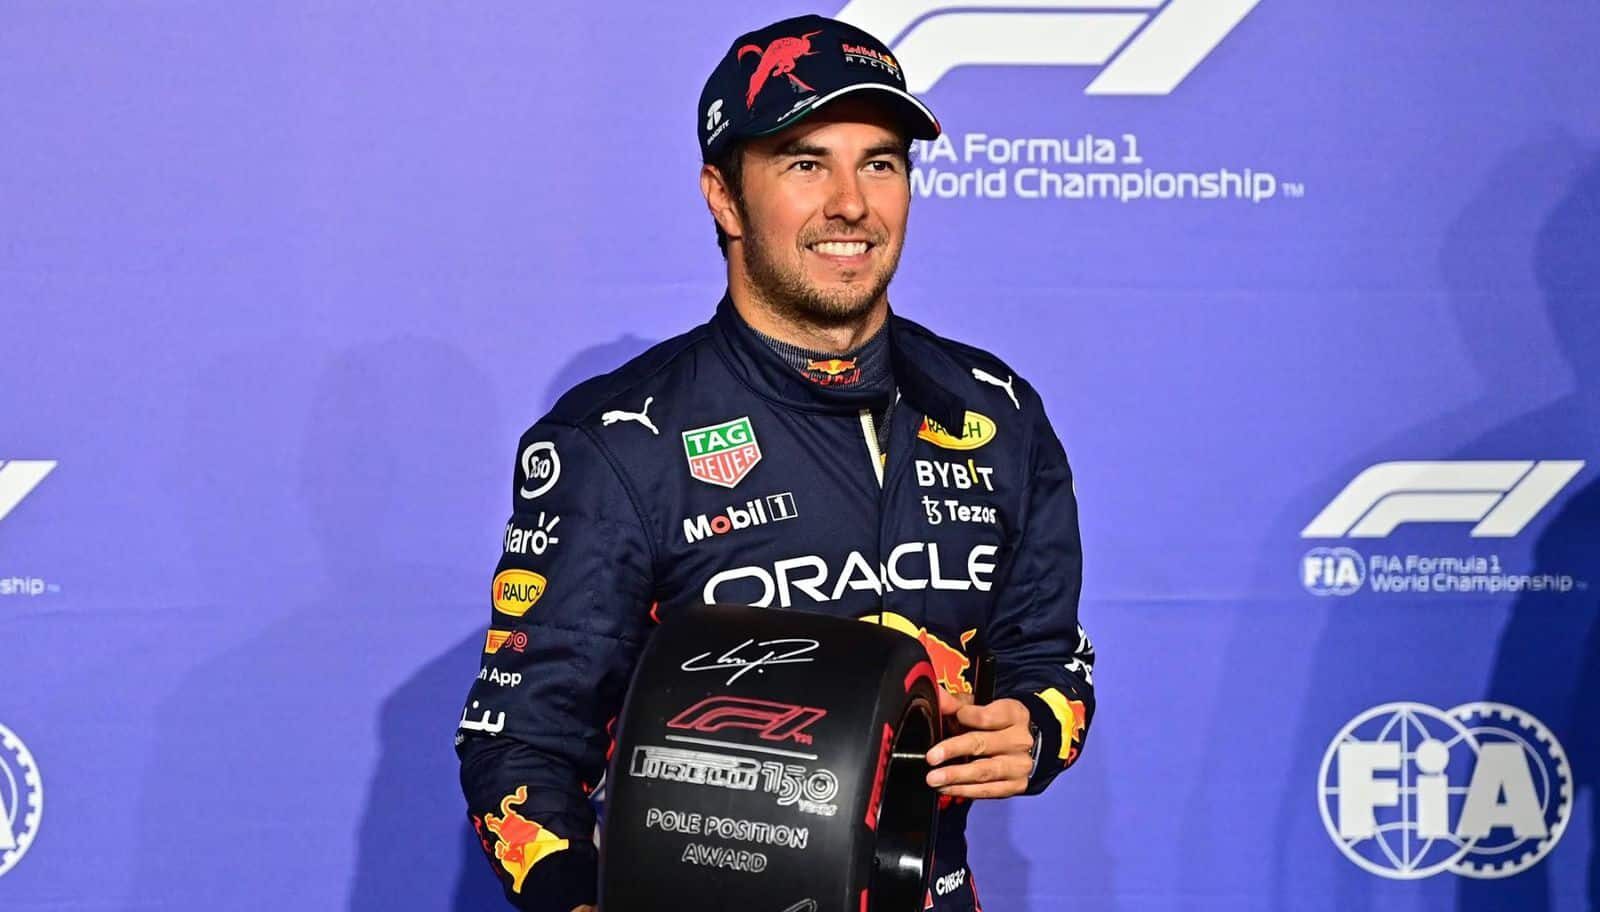  ¡Buen augurio! Sergio “Checo” Pérez espera repetir su Pole en el Gran Premio de Arabia Saudí 